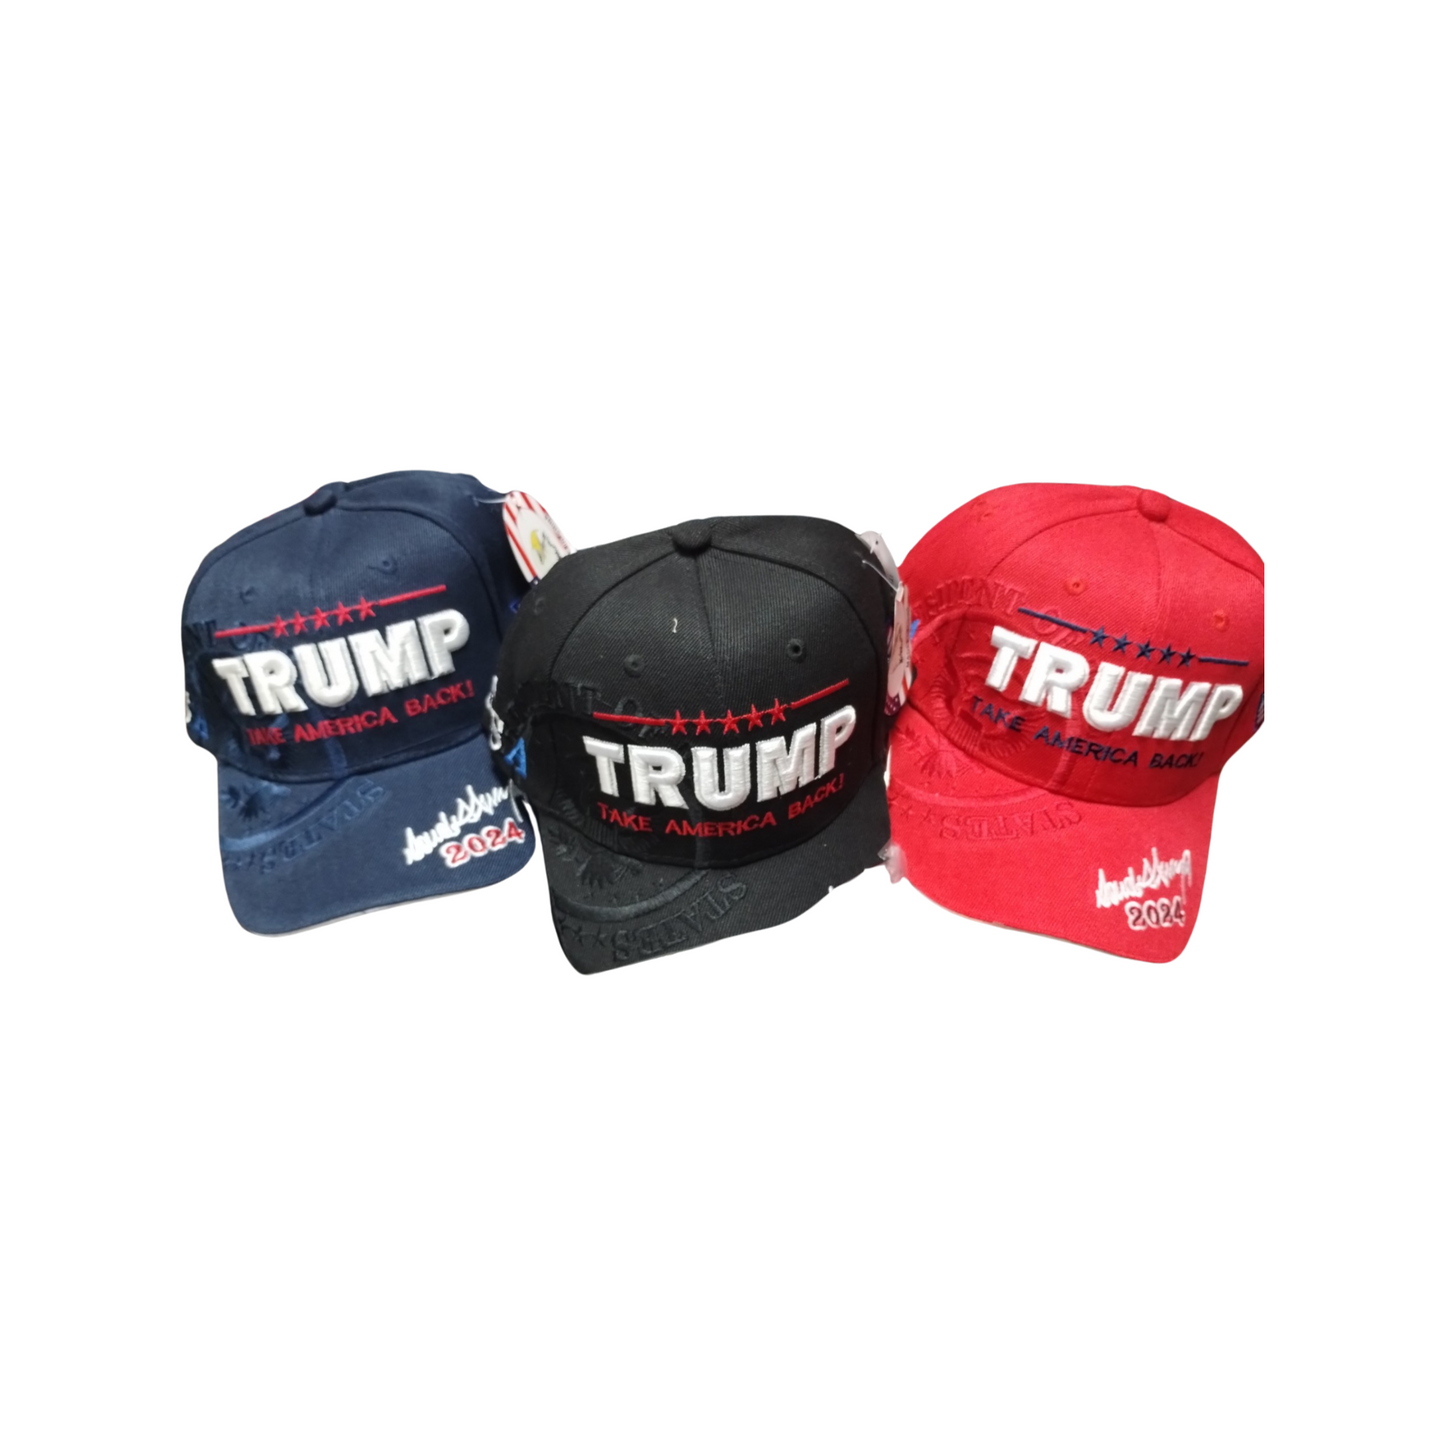 "Trump Take America Back Baseball Cap - Patriotic Support Headwear"